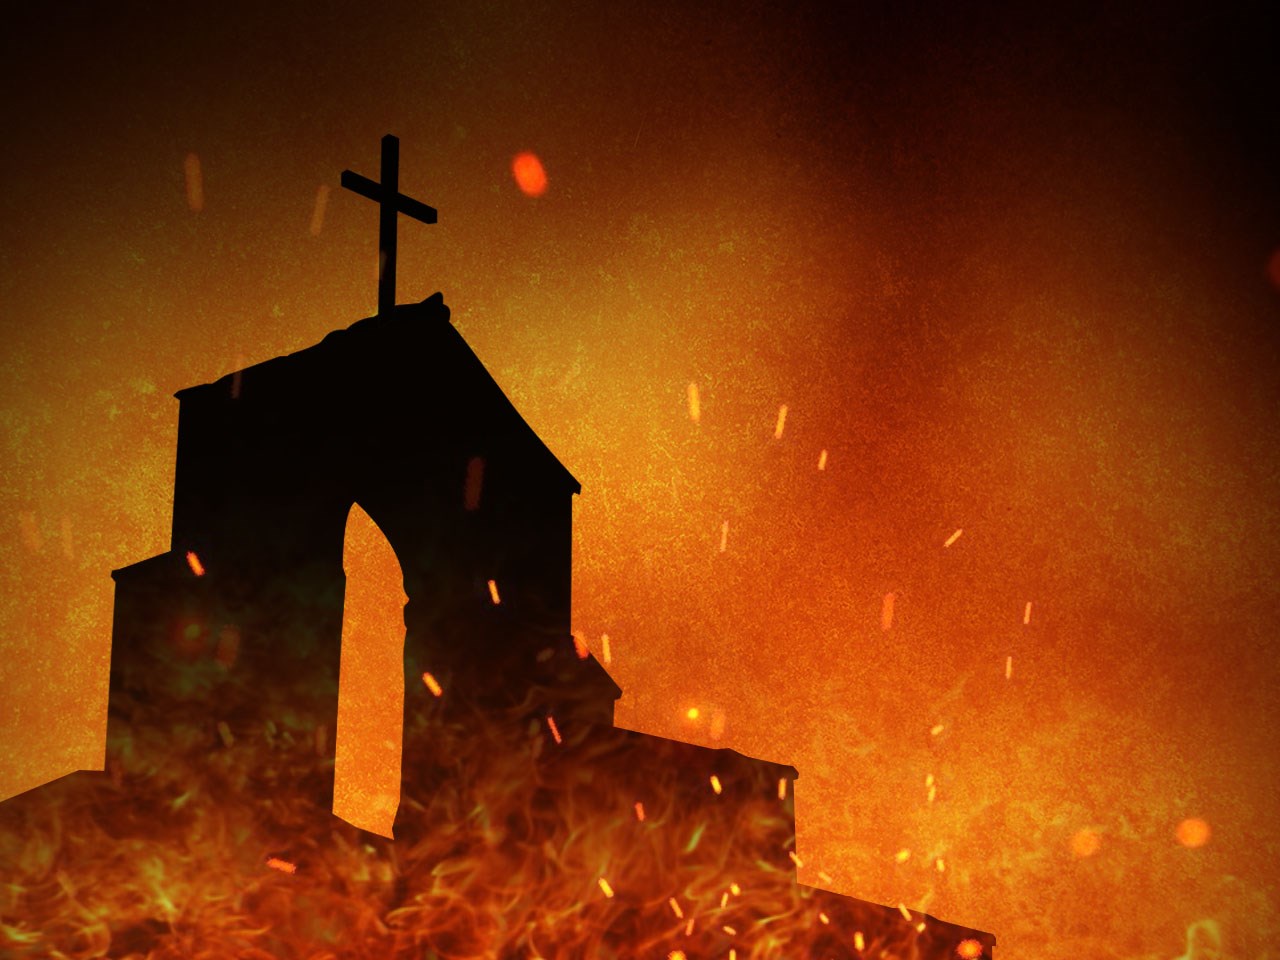 Man found not responsible for burning down Nebraska church